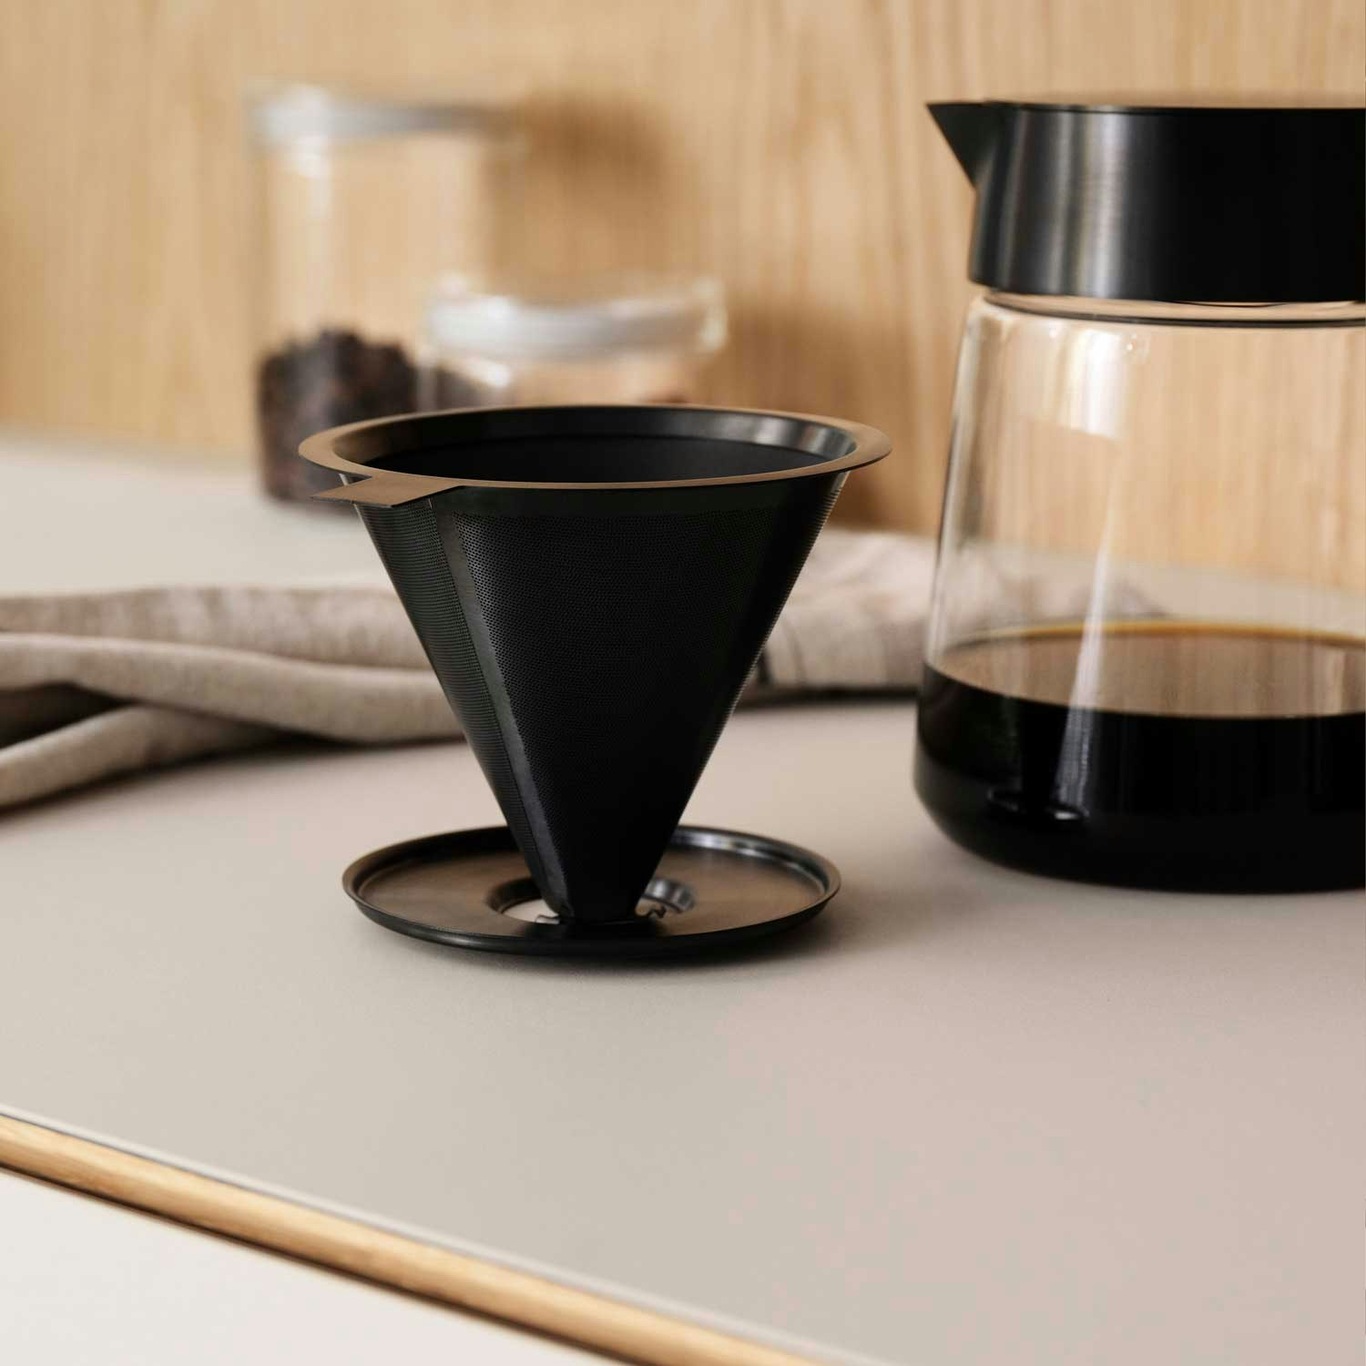 https://royaldesign.com/image/2/stelton-nohr-slow-drew-dripper-coffee-filter-3?w=800&quality=80